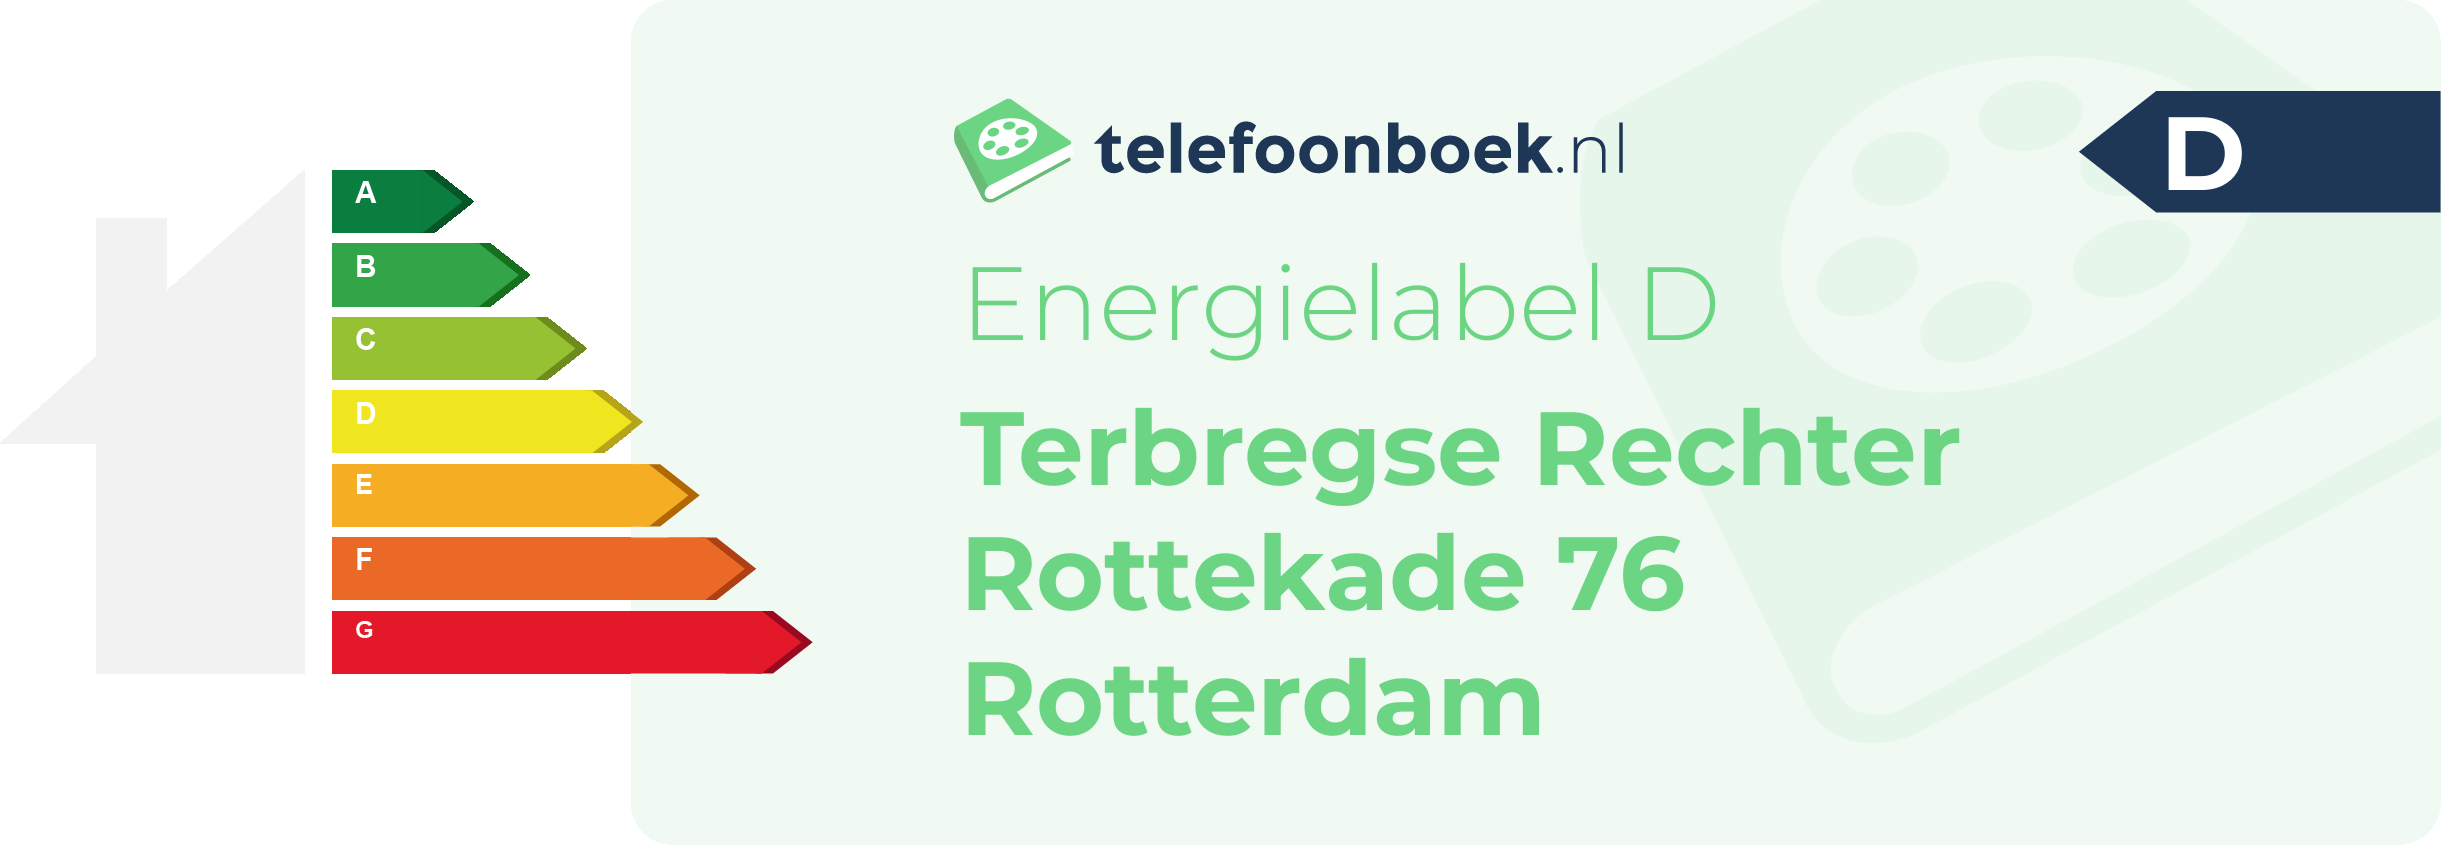 Energielabel Terbregse Rechter Rottekade 76 Rotterdam